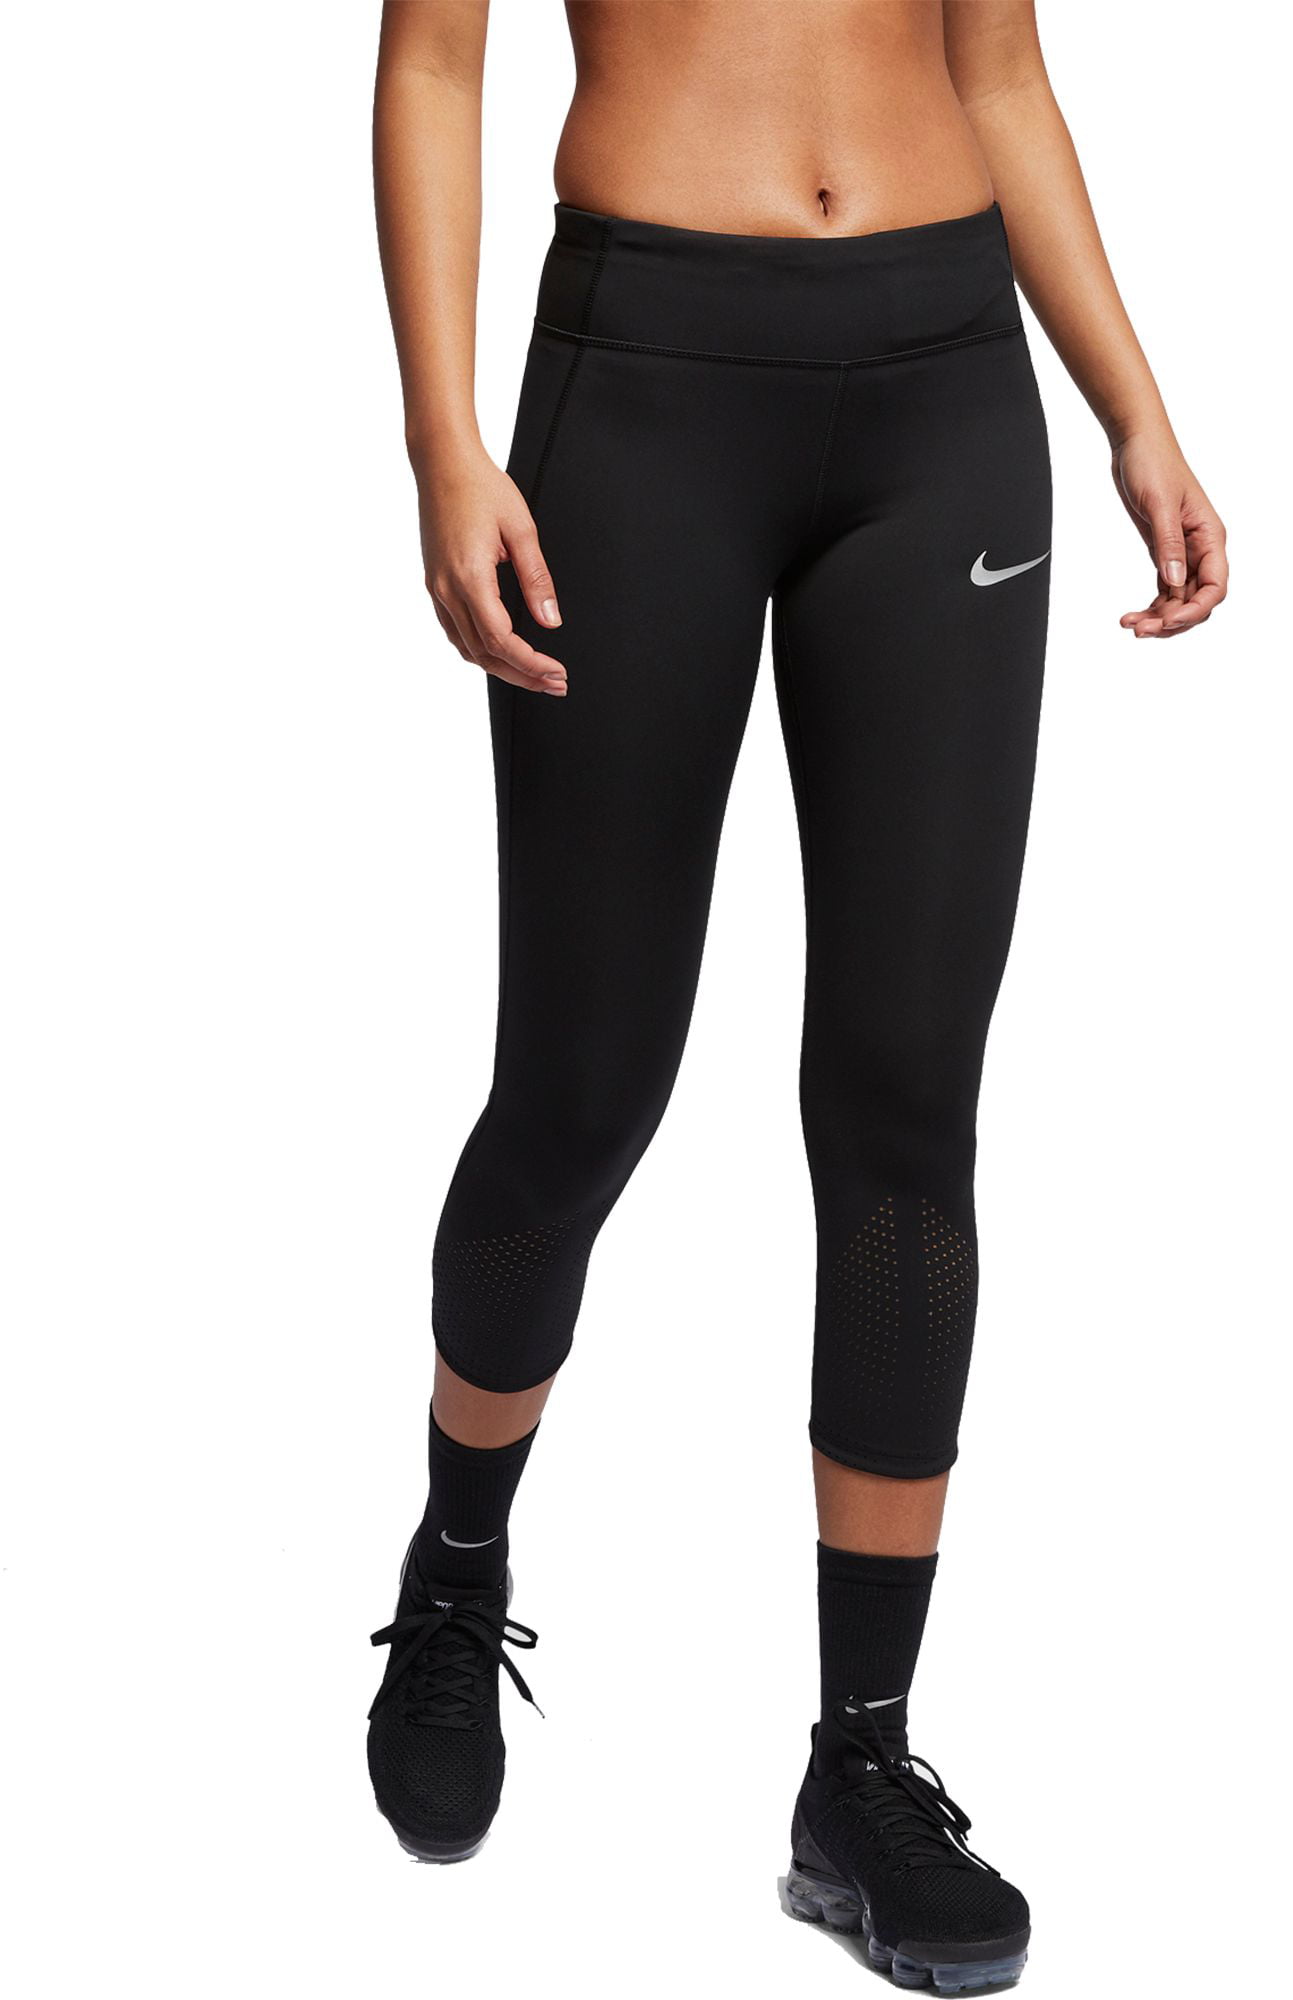 uitglijden band Dalset Women's Nike Epic Lux Running Cropped Leggings, Black, S - Walmart.com